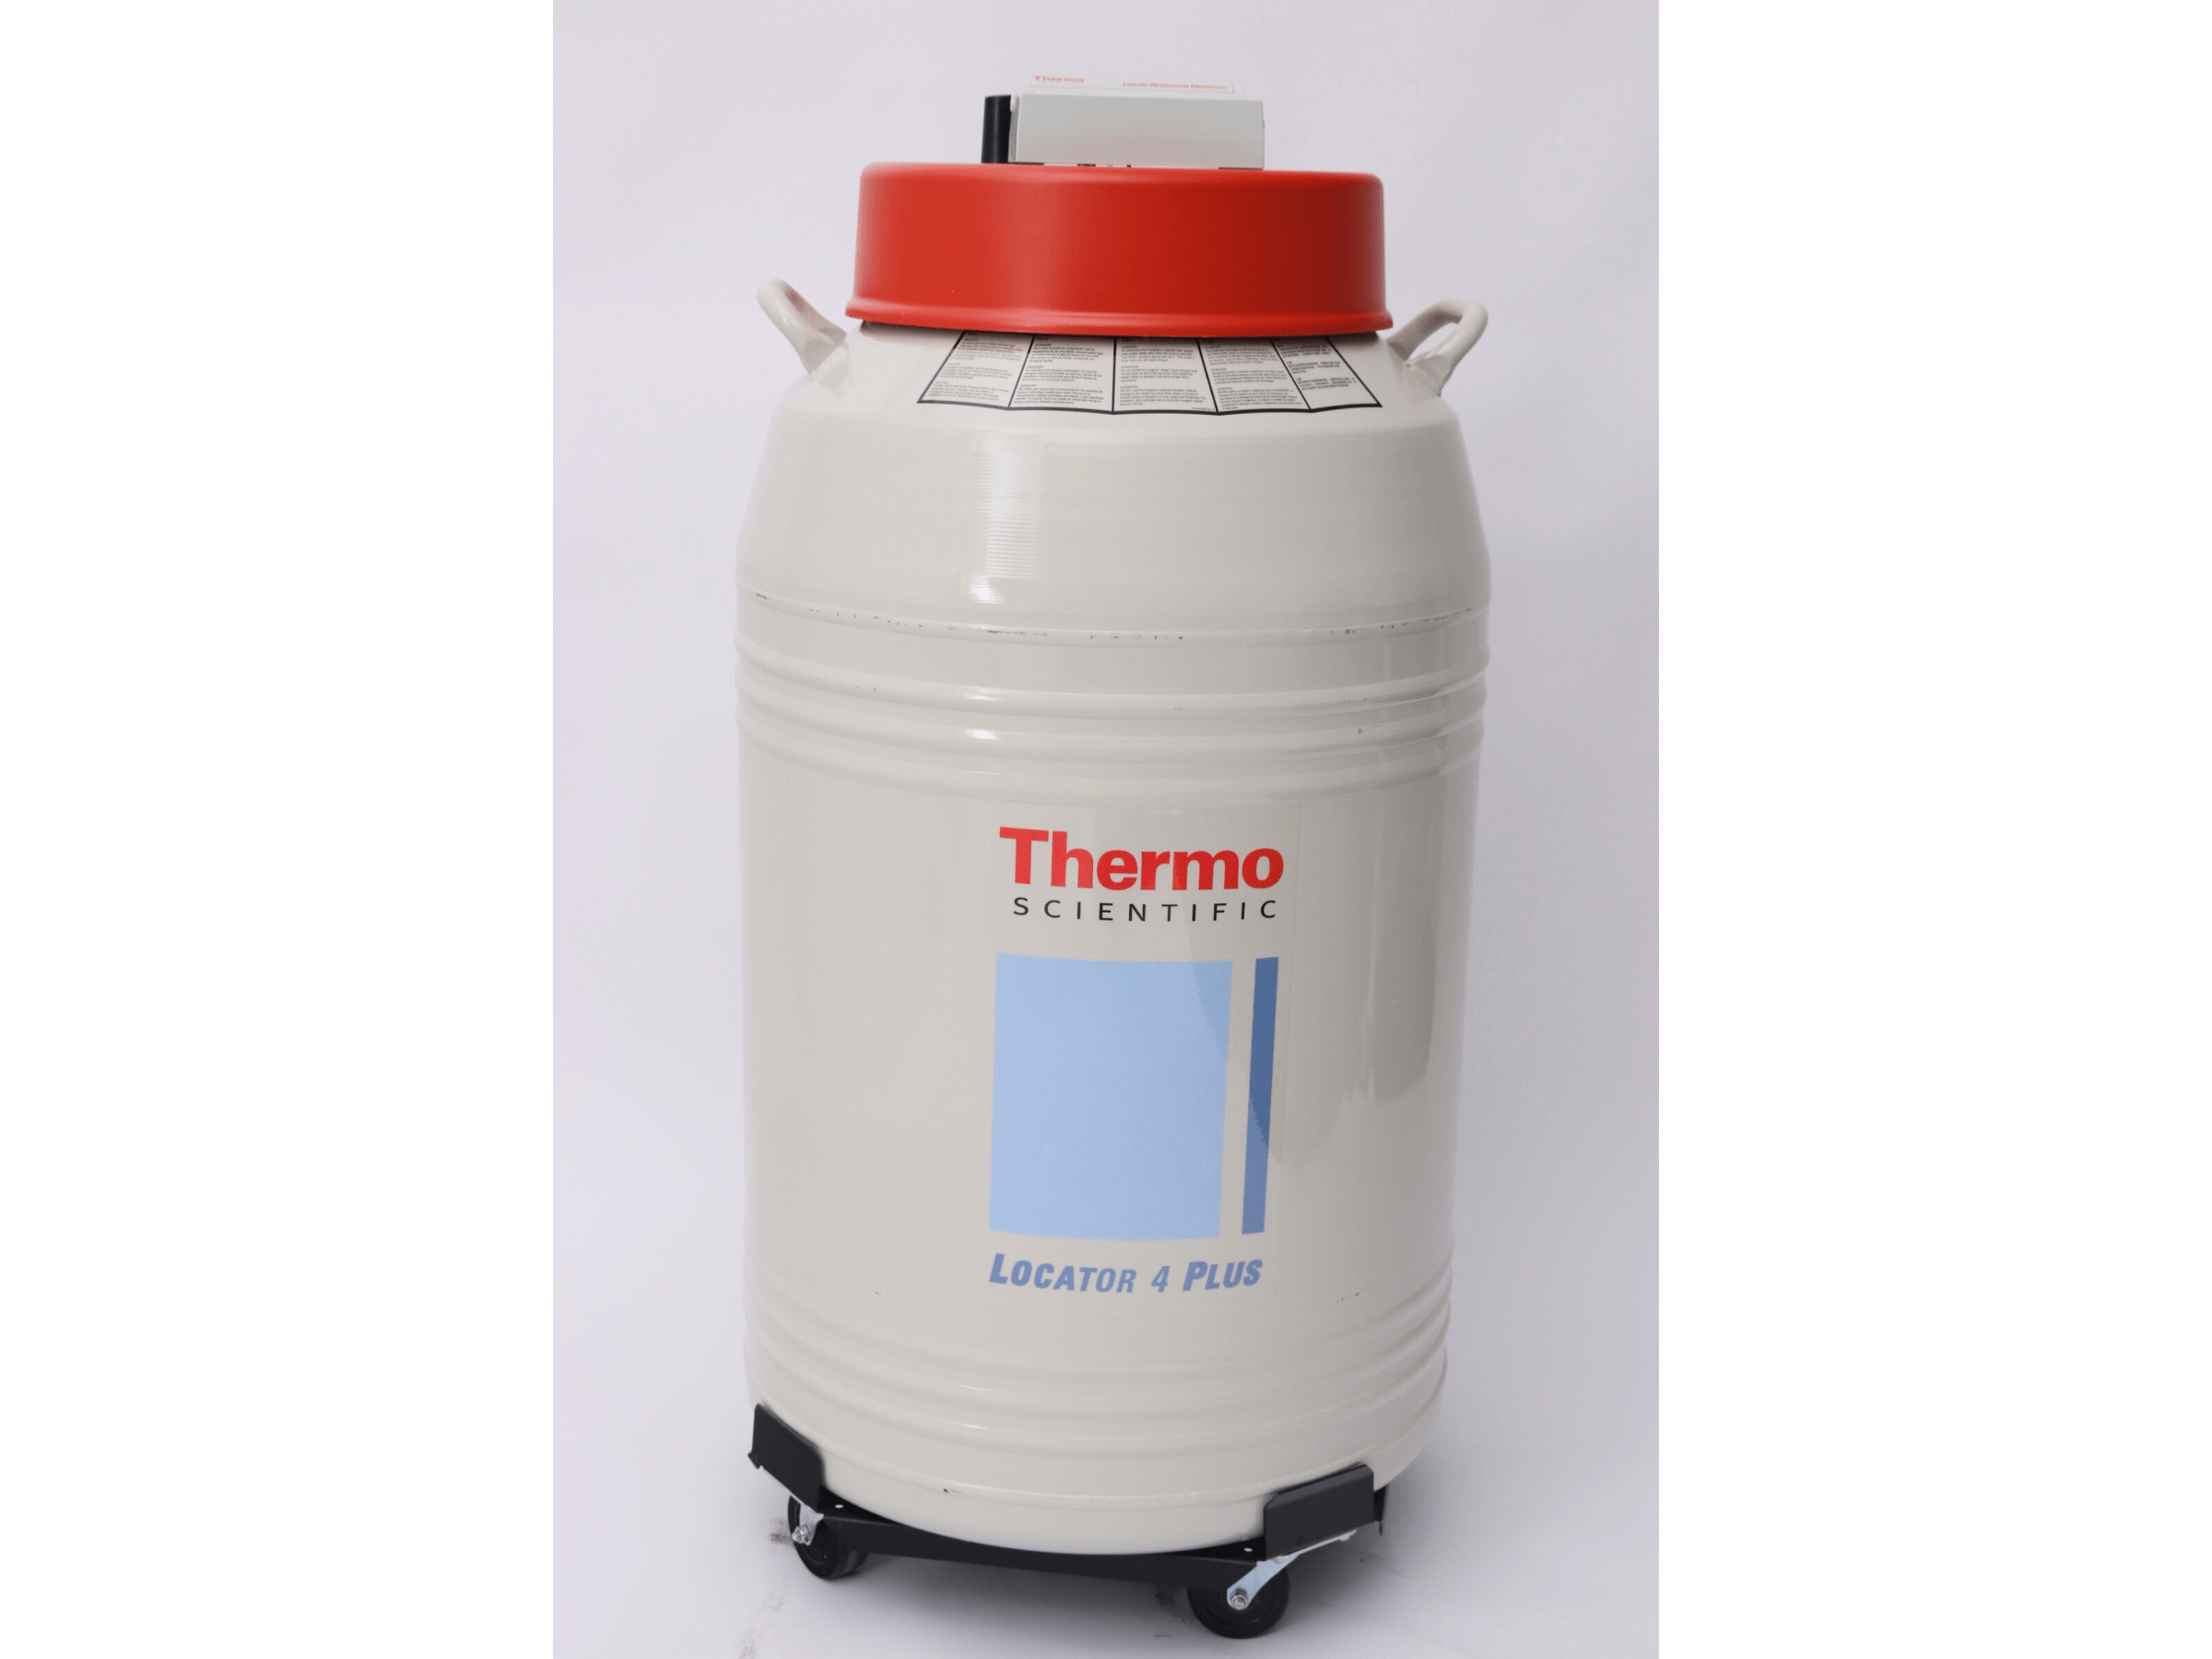 Thermo Scientific Locator 4 Plus Cryogenic Storage Vessel